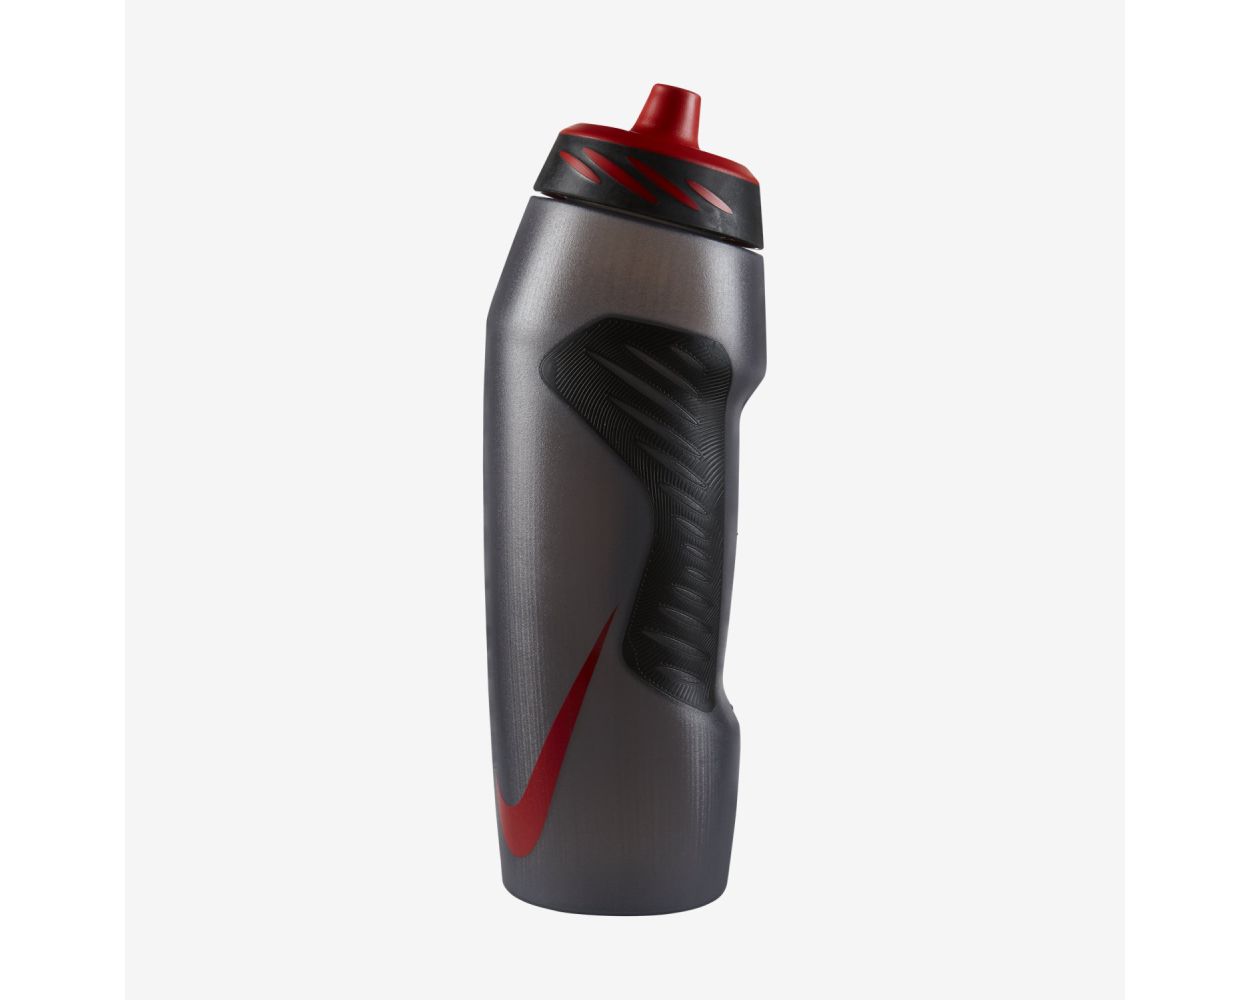 Nike Hyperfuel 2.0 Water Bottle 32oz Anthracite/Black